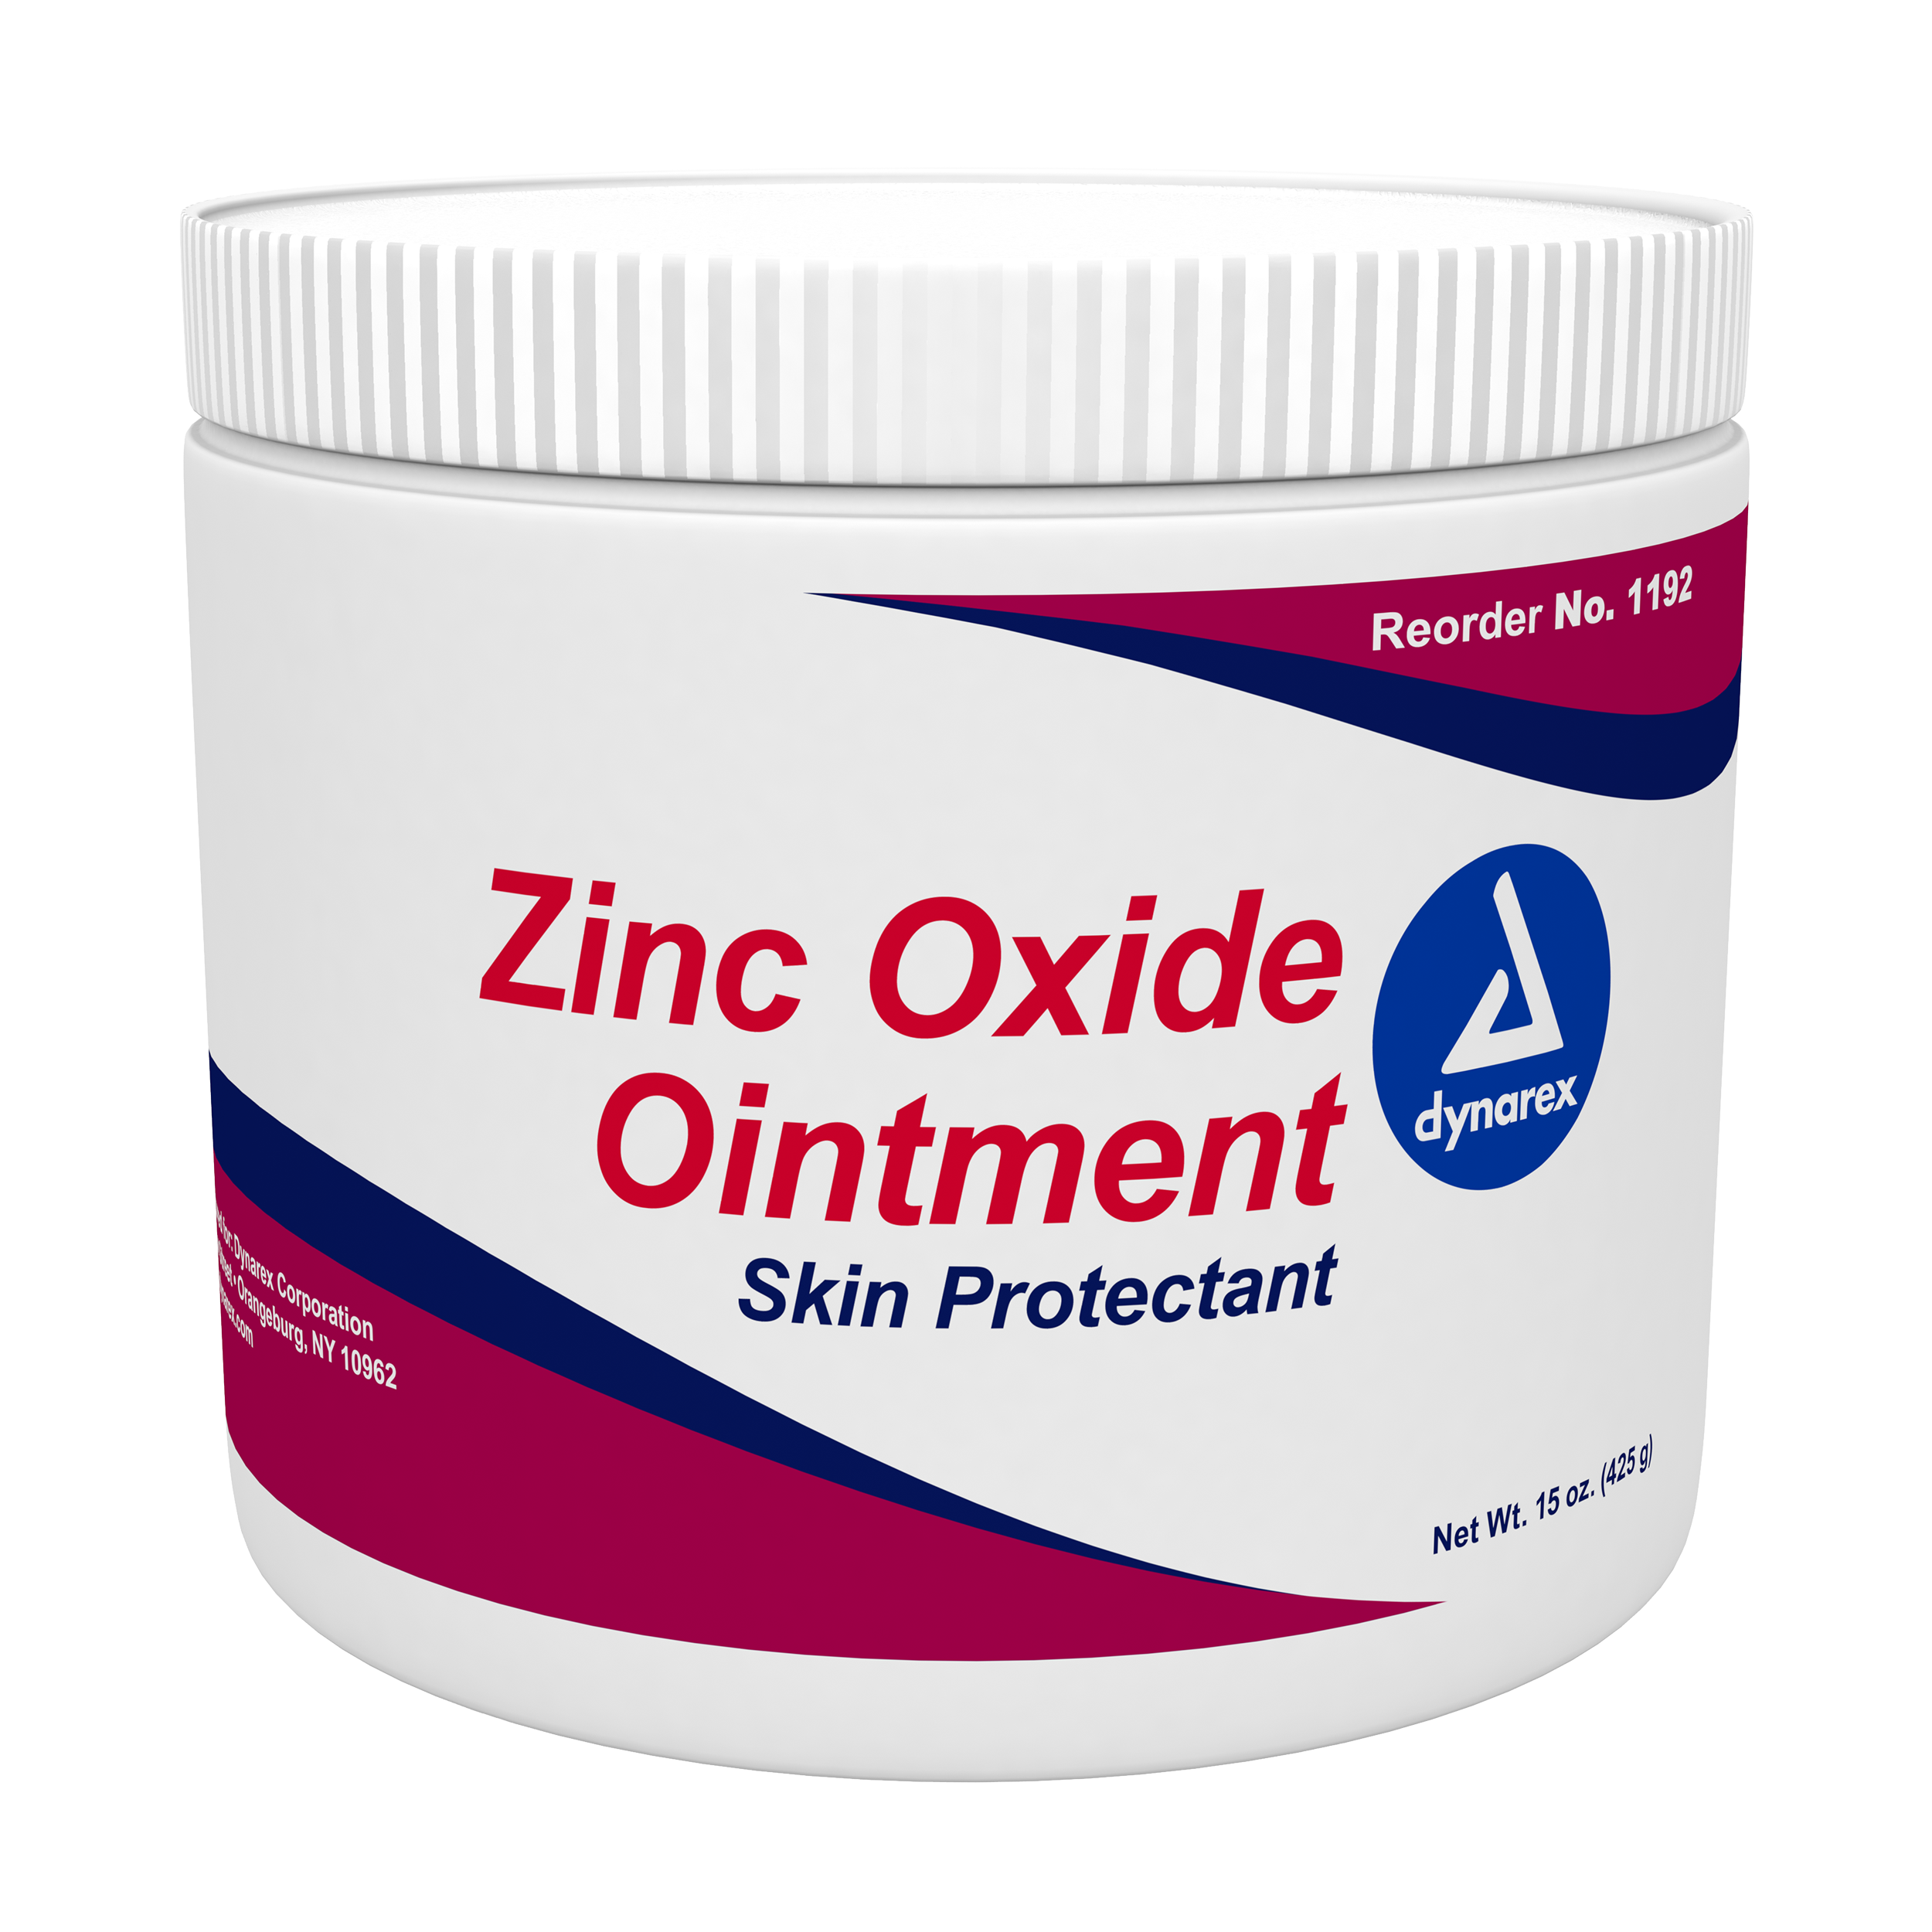 Cream zinc oxide Zinc Oxide